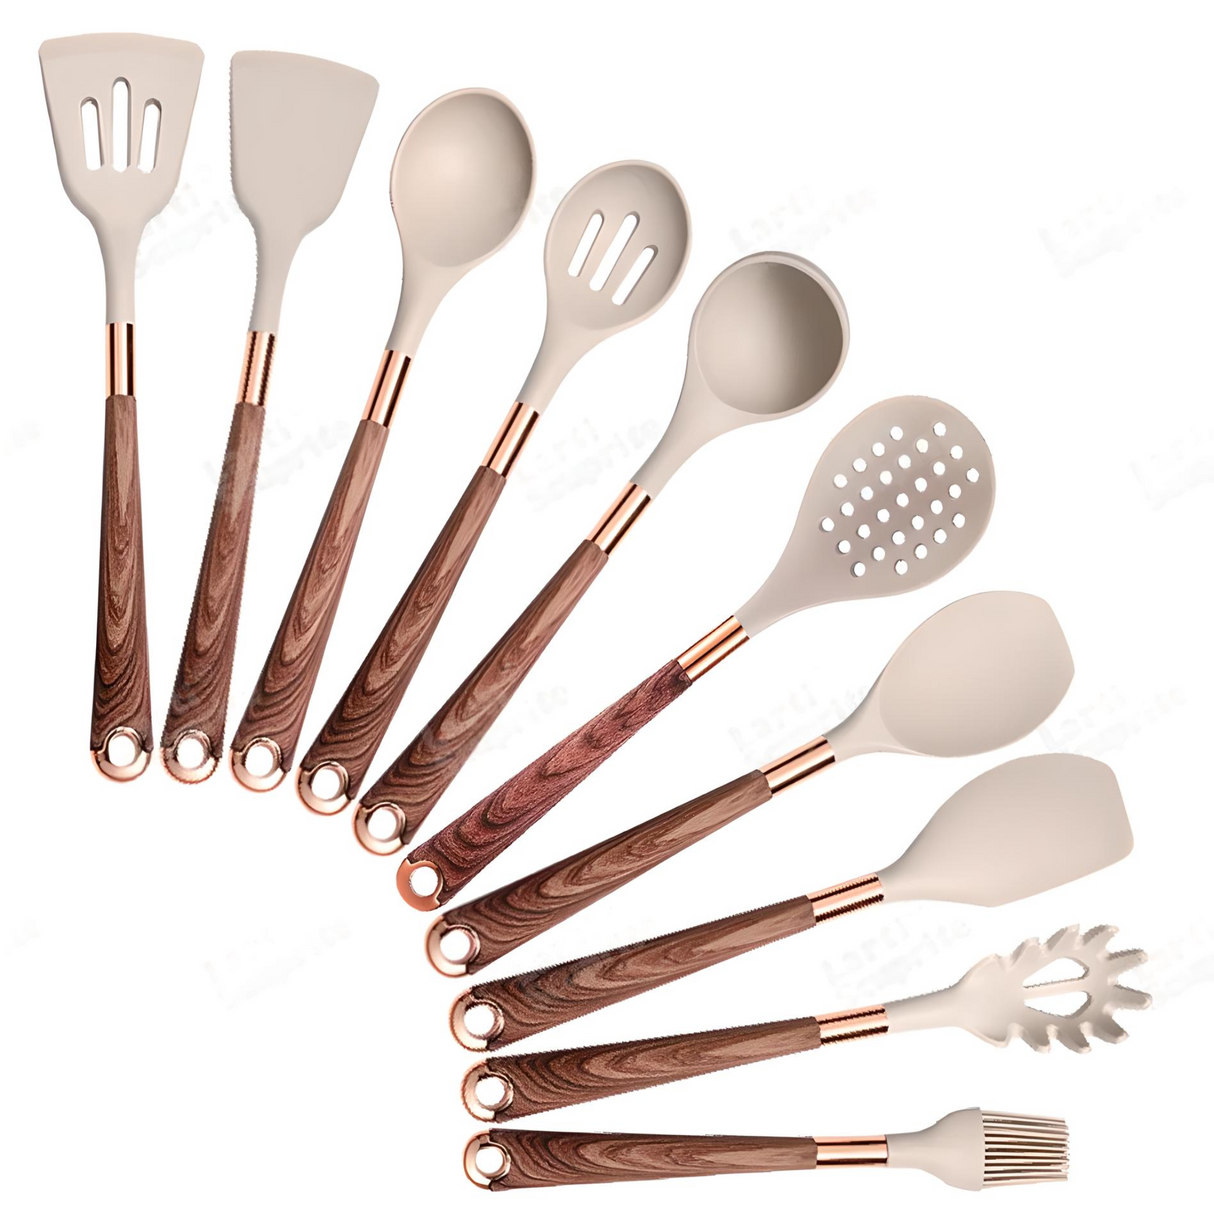 Silicone Kitchen Utensils Set - Heat Resistant, Non-stick, Rose Gold Plated Handles kitchen tools & utensils Julia M Home & Kitchen   